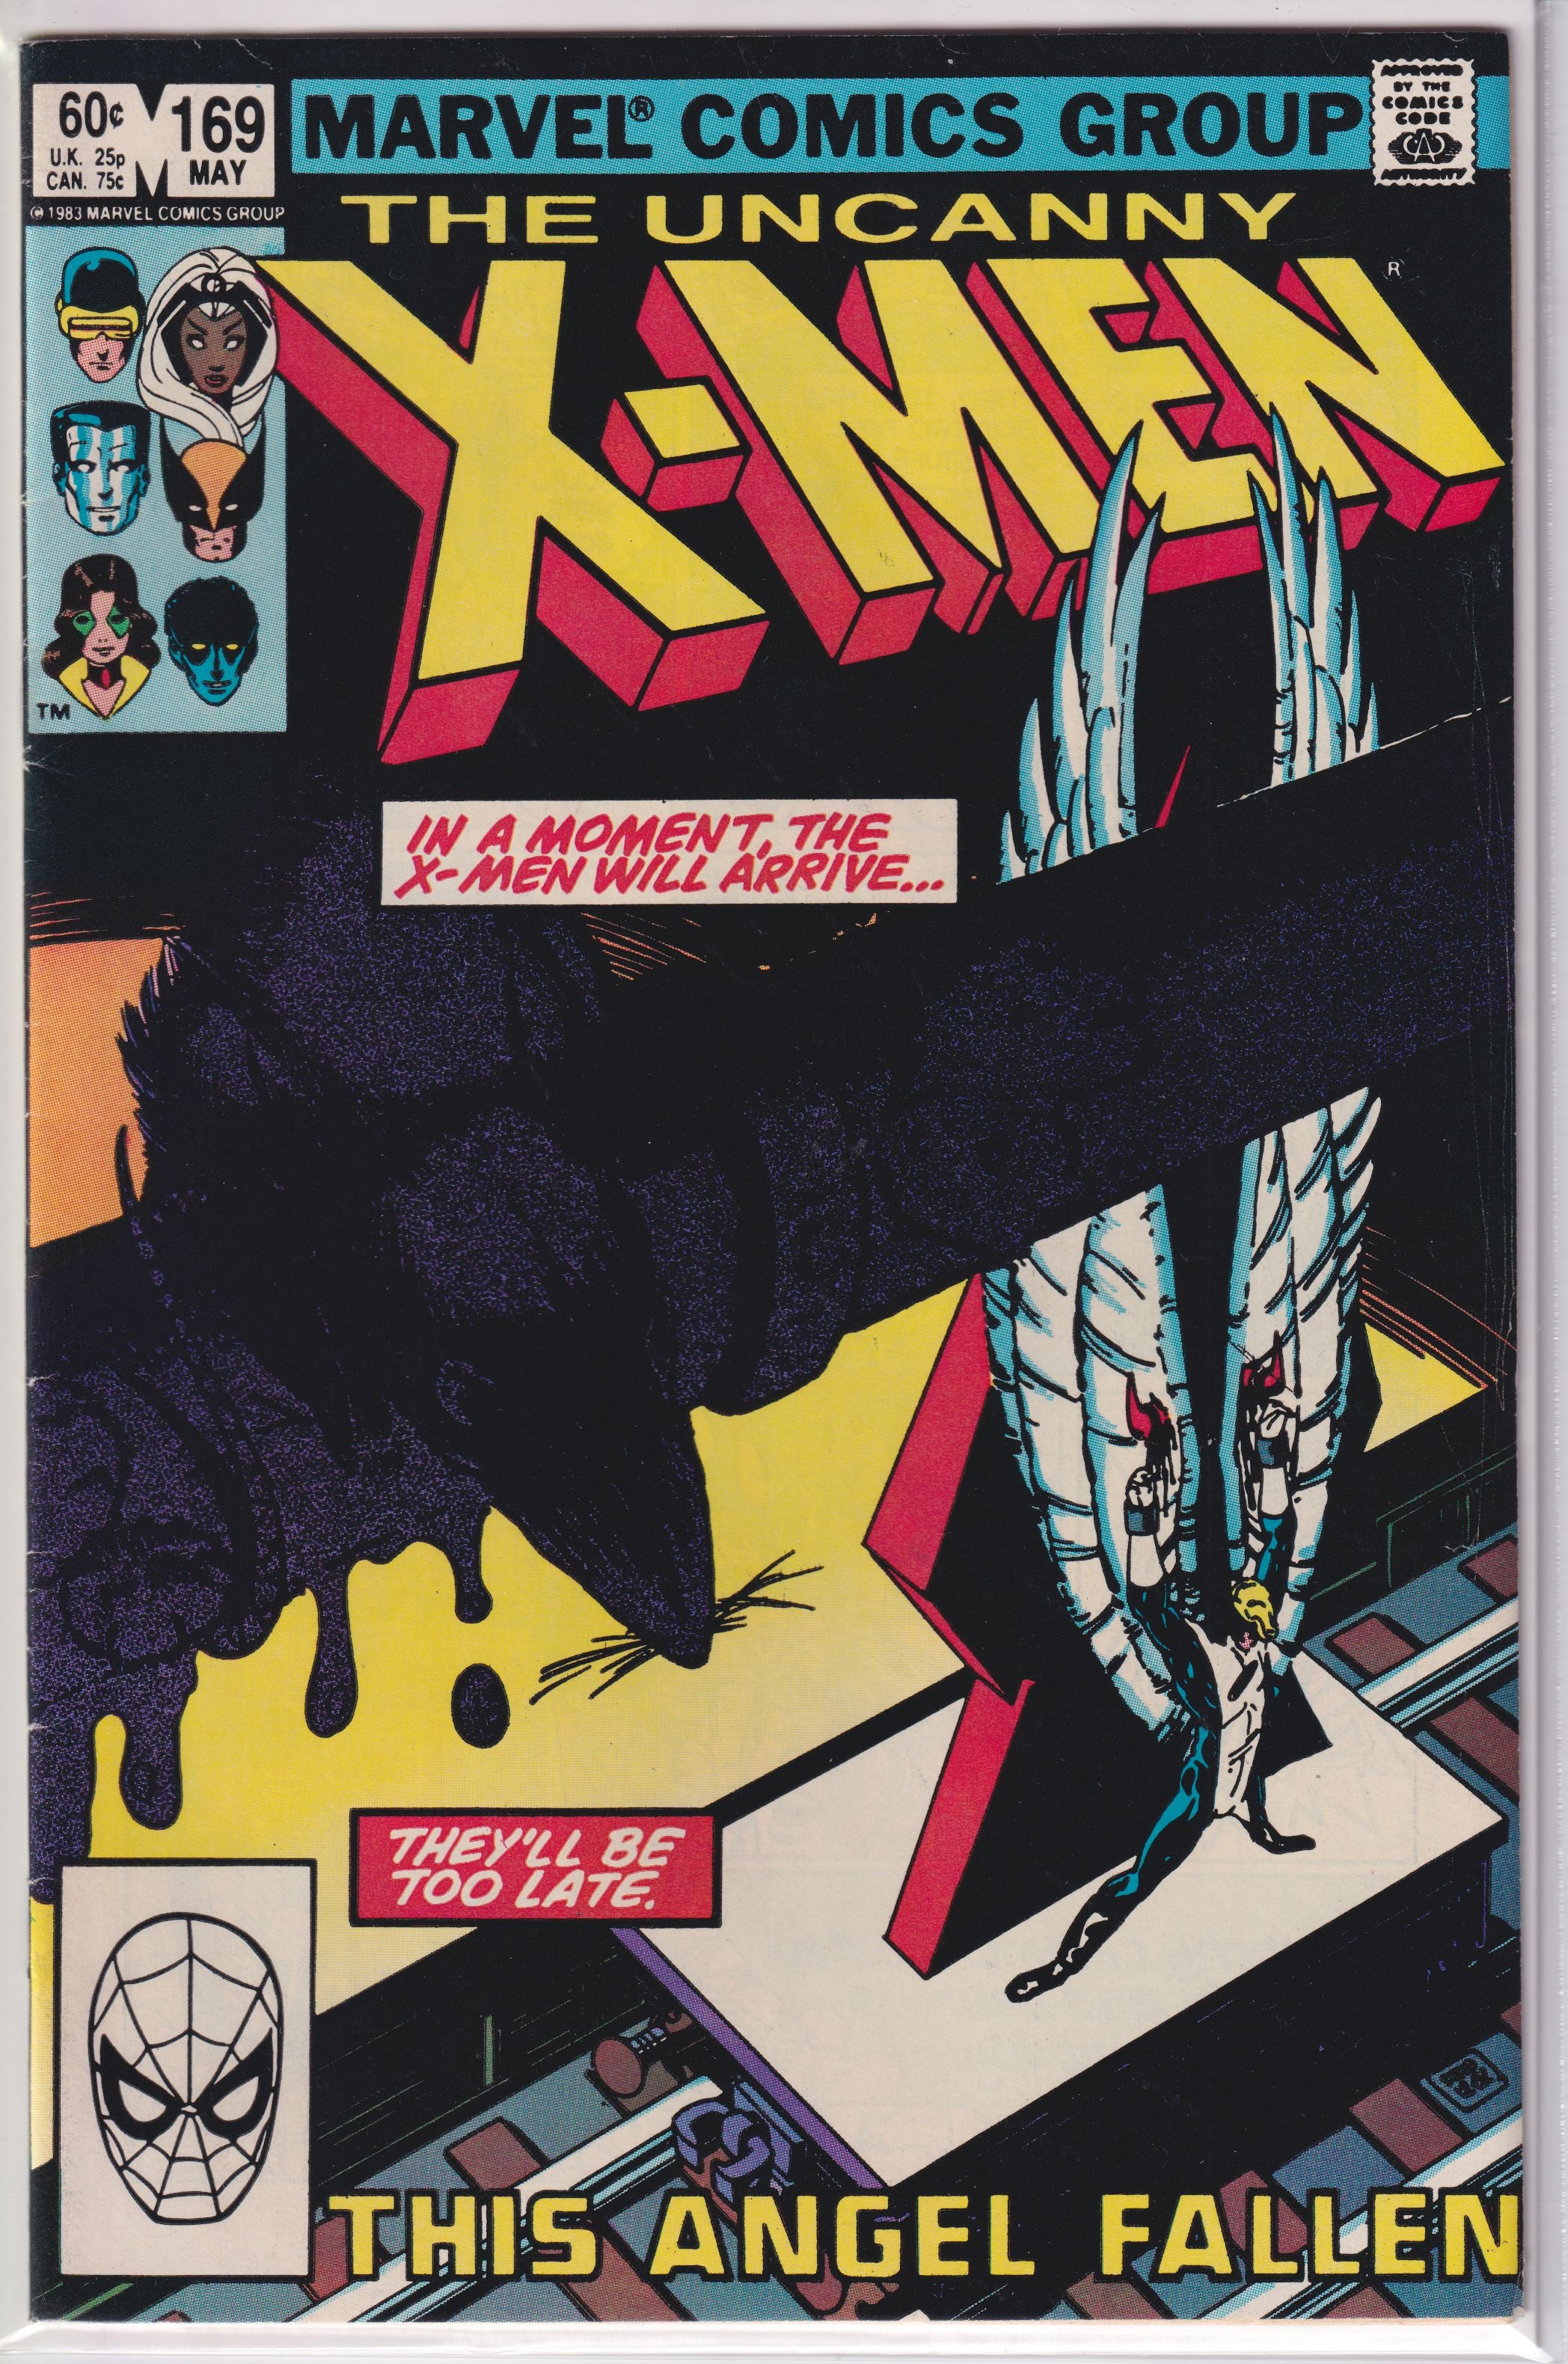 UNCANNY X-MEN (1981) #169 FN